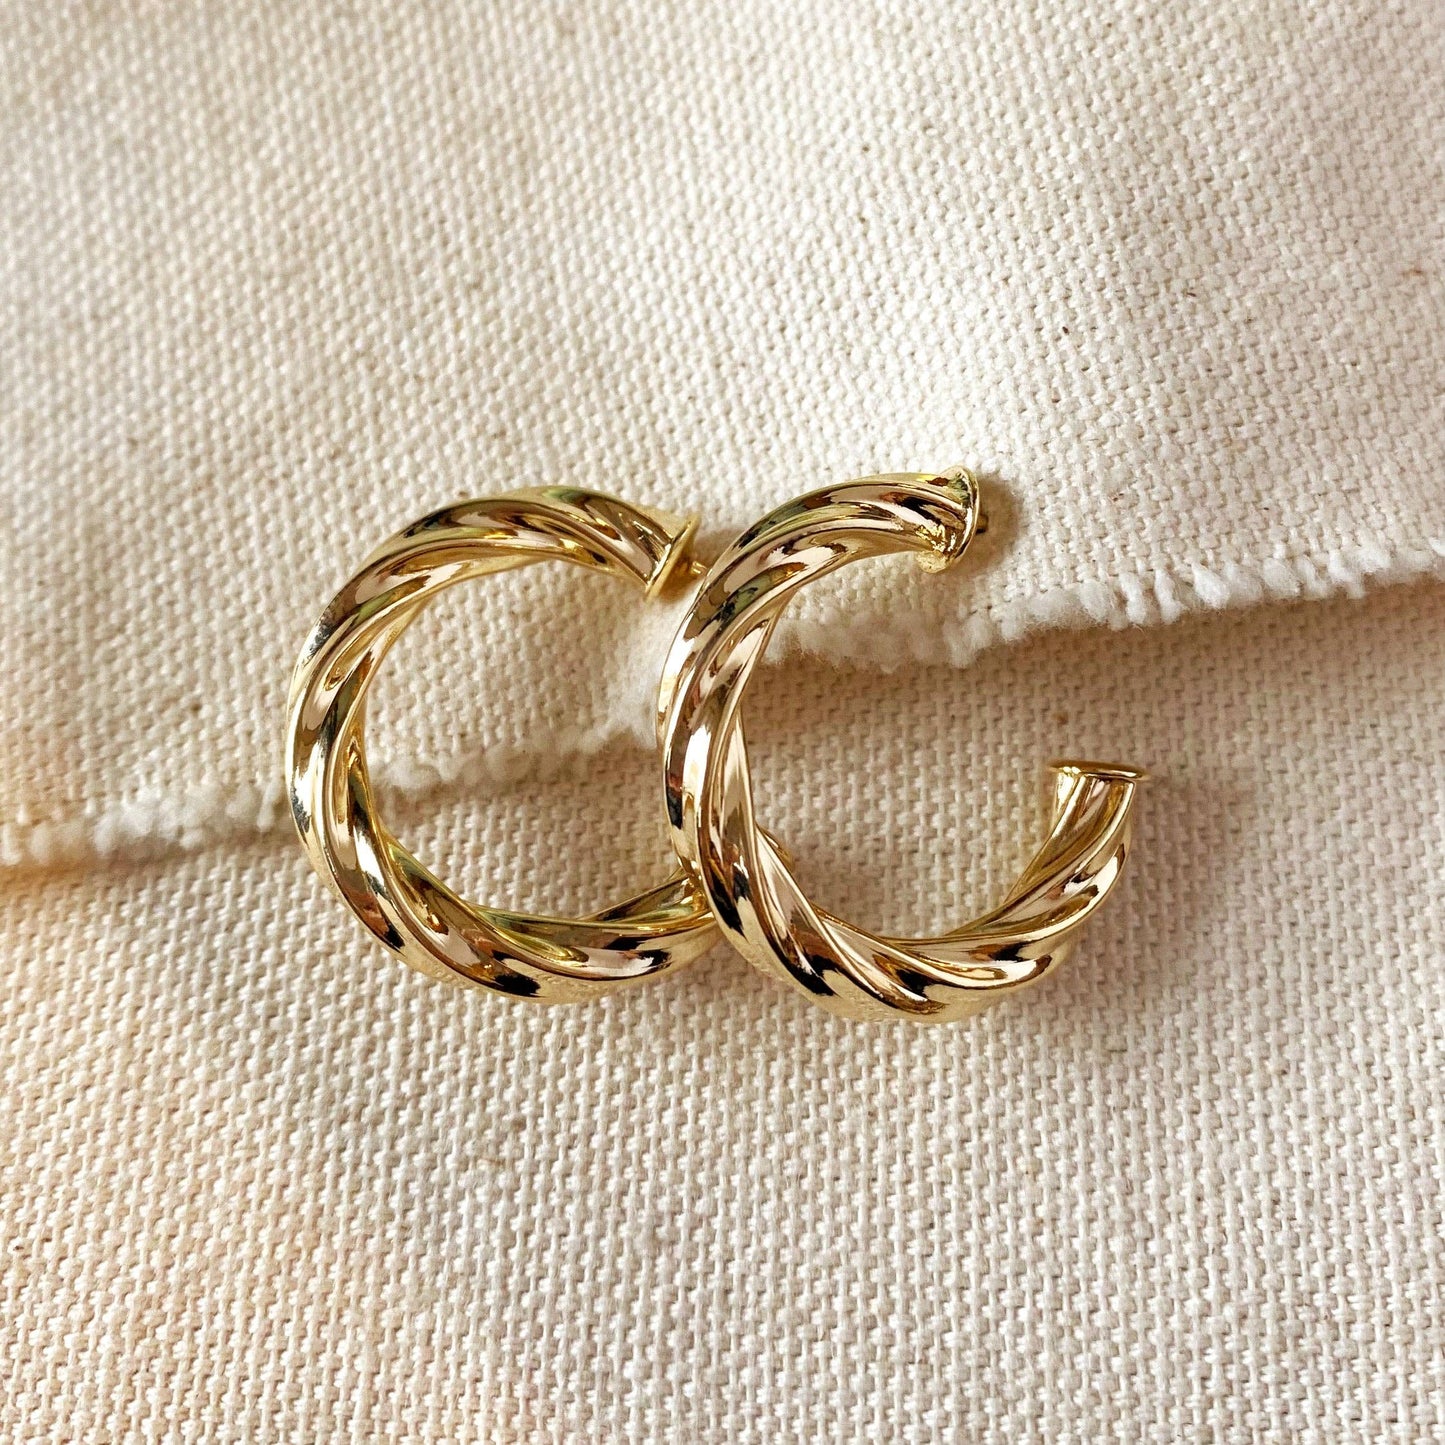 GoldFi - 18k Gold Filled Twisted Half-Hoop Earrings